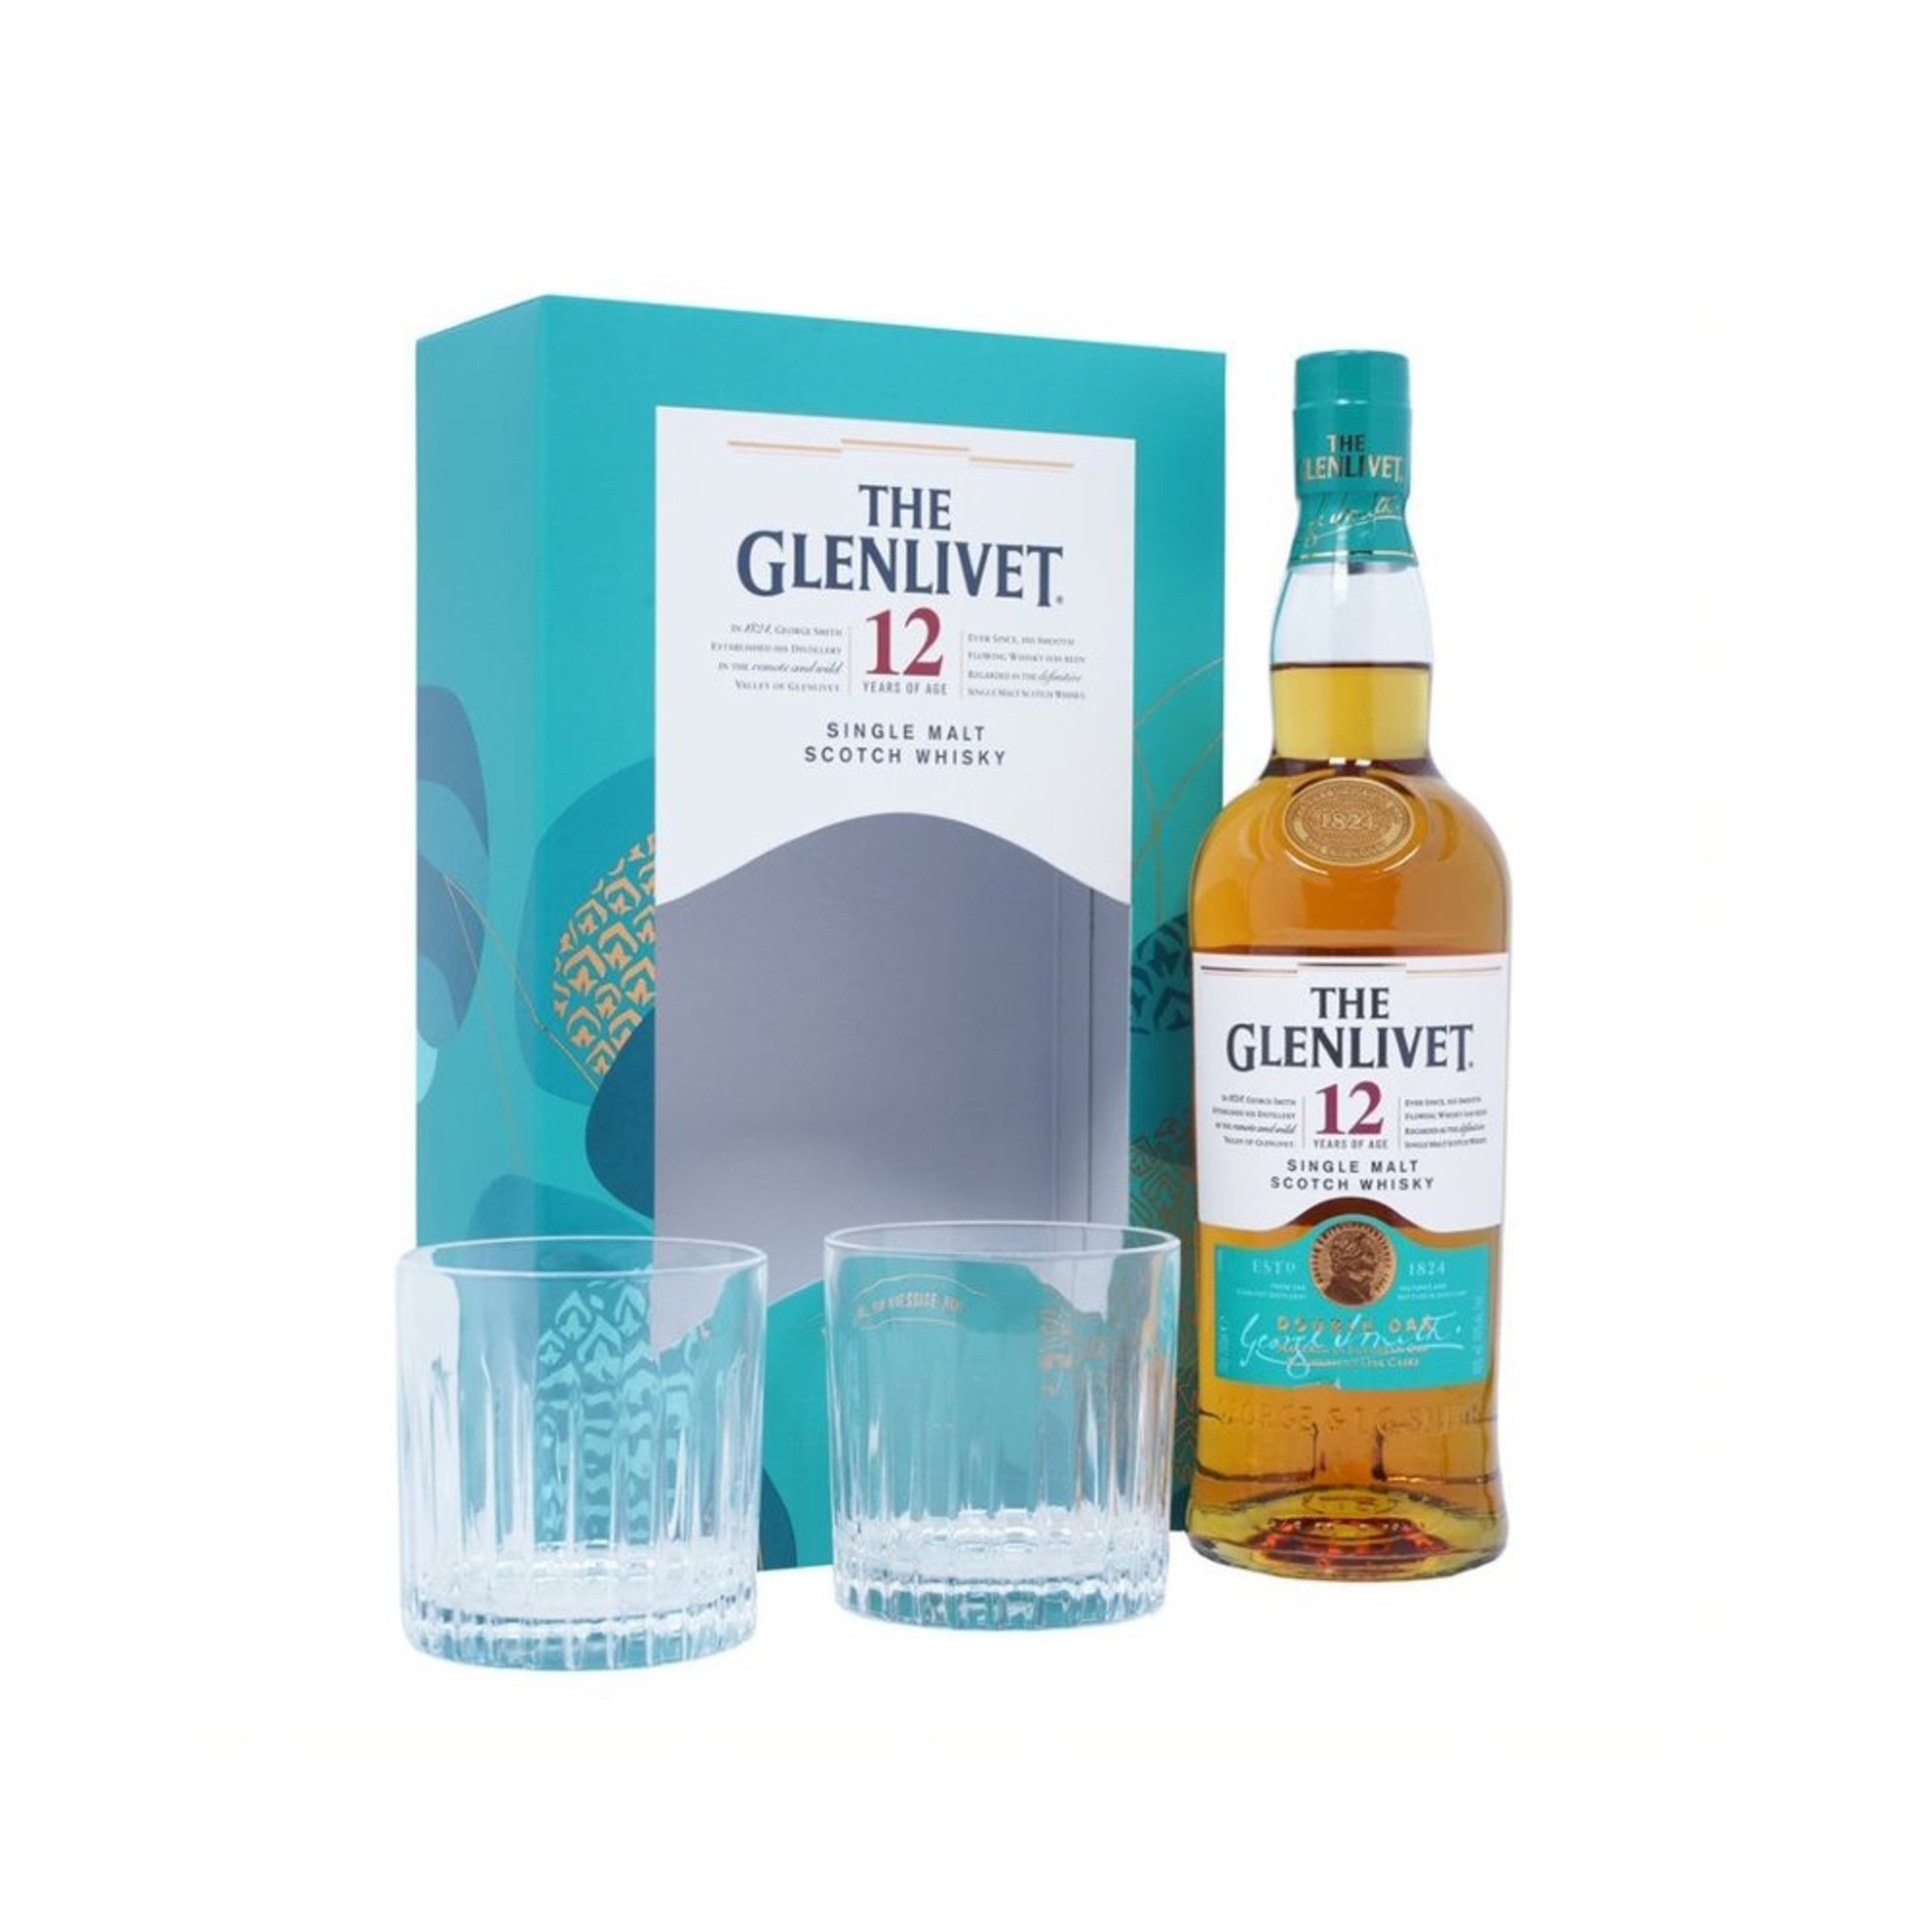 The Glenlivet 12 Year Old Single Malt Scotch Whisky Gift